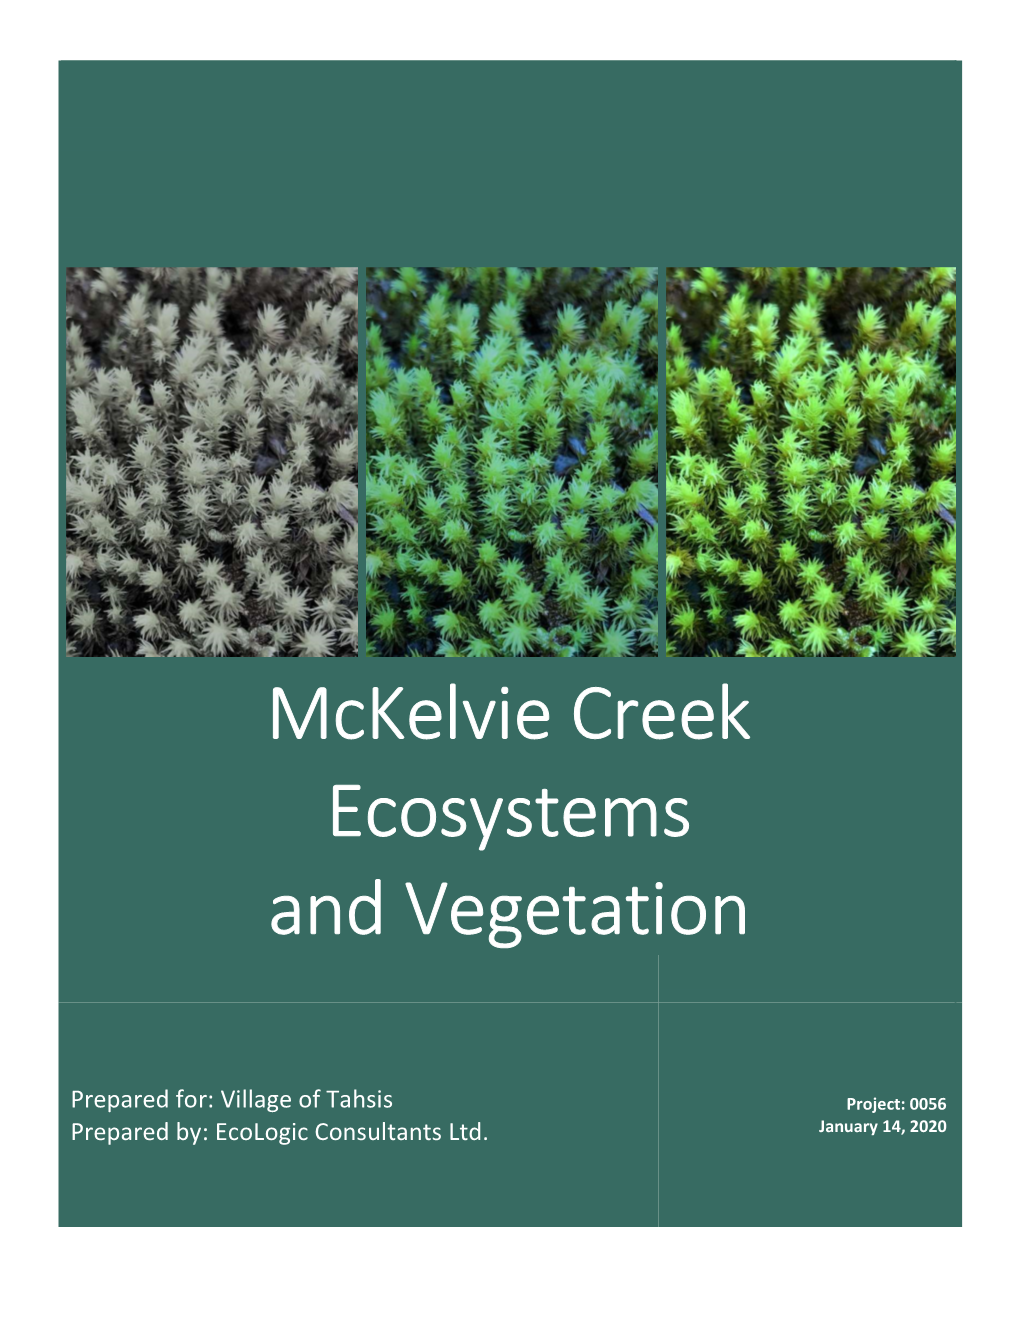 Mckelvie Ecosystems and Vegetation